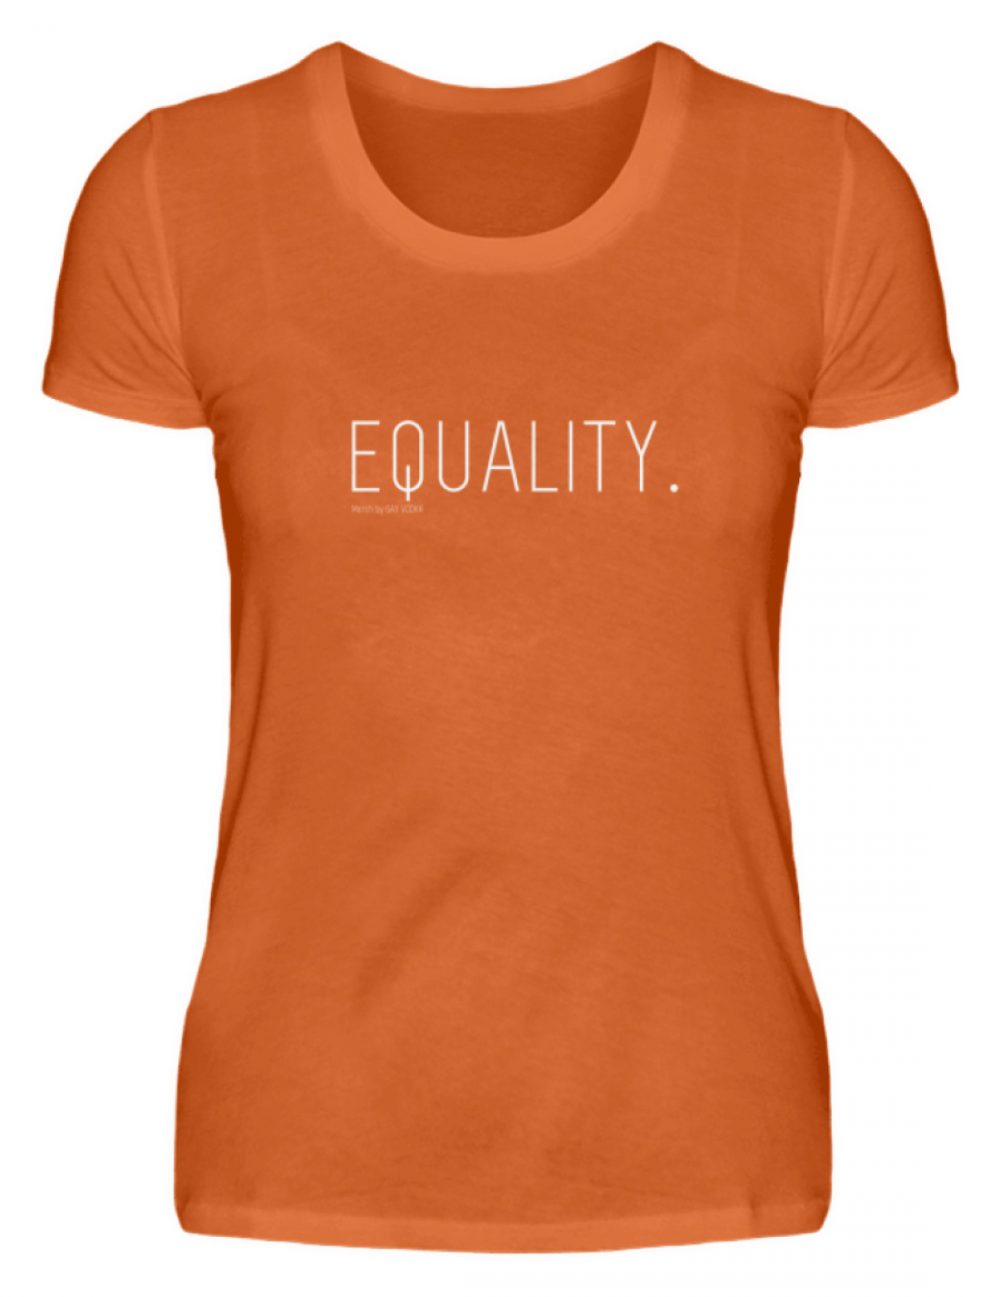 EQUALITY. - Damen Premiumshirt-2953